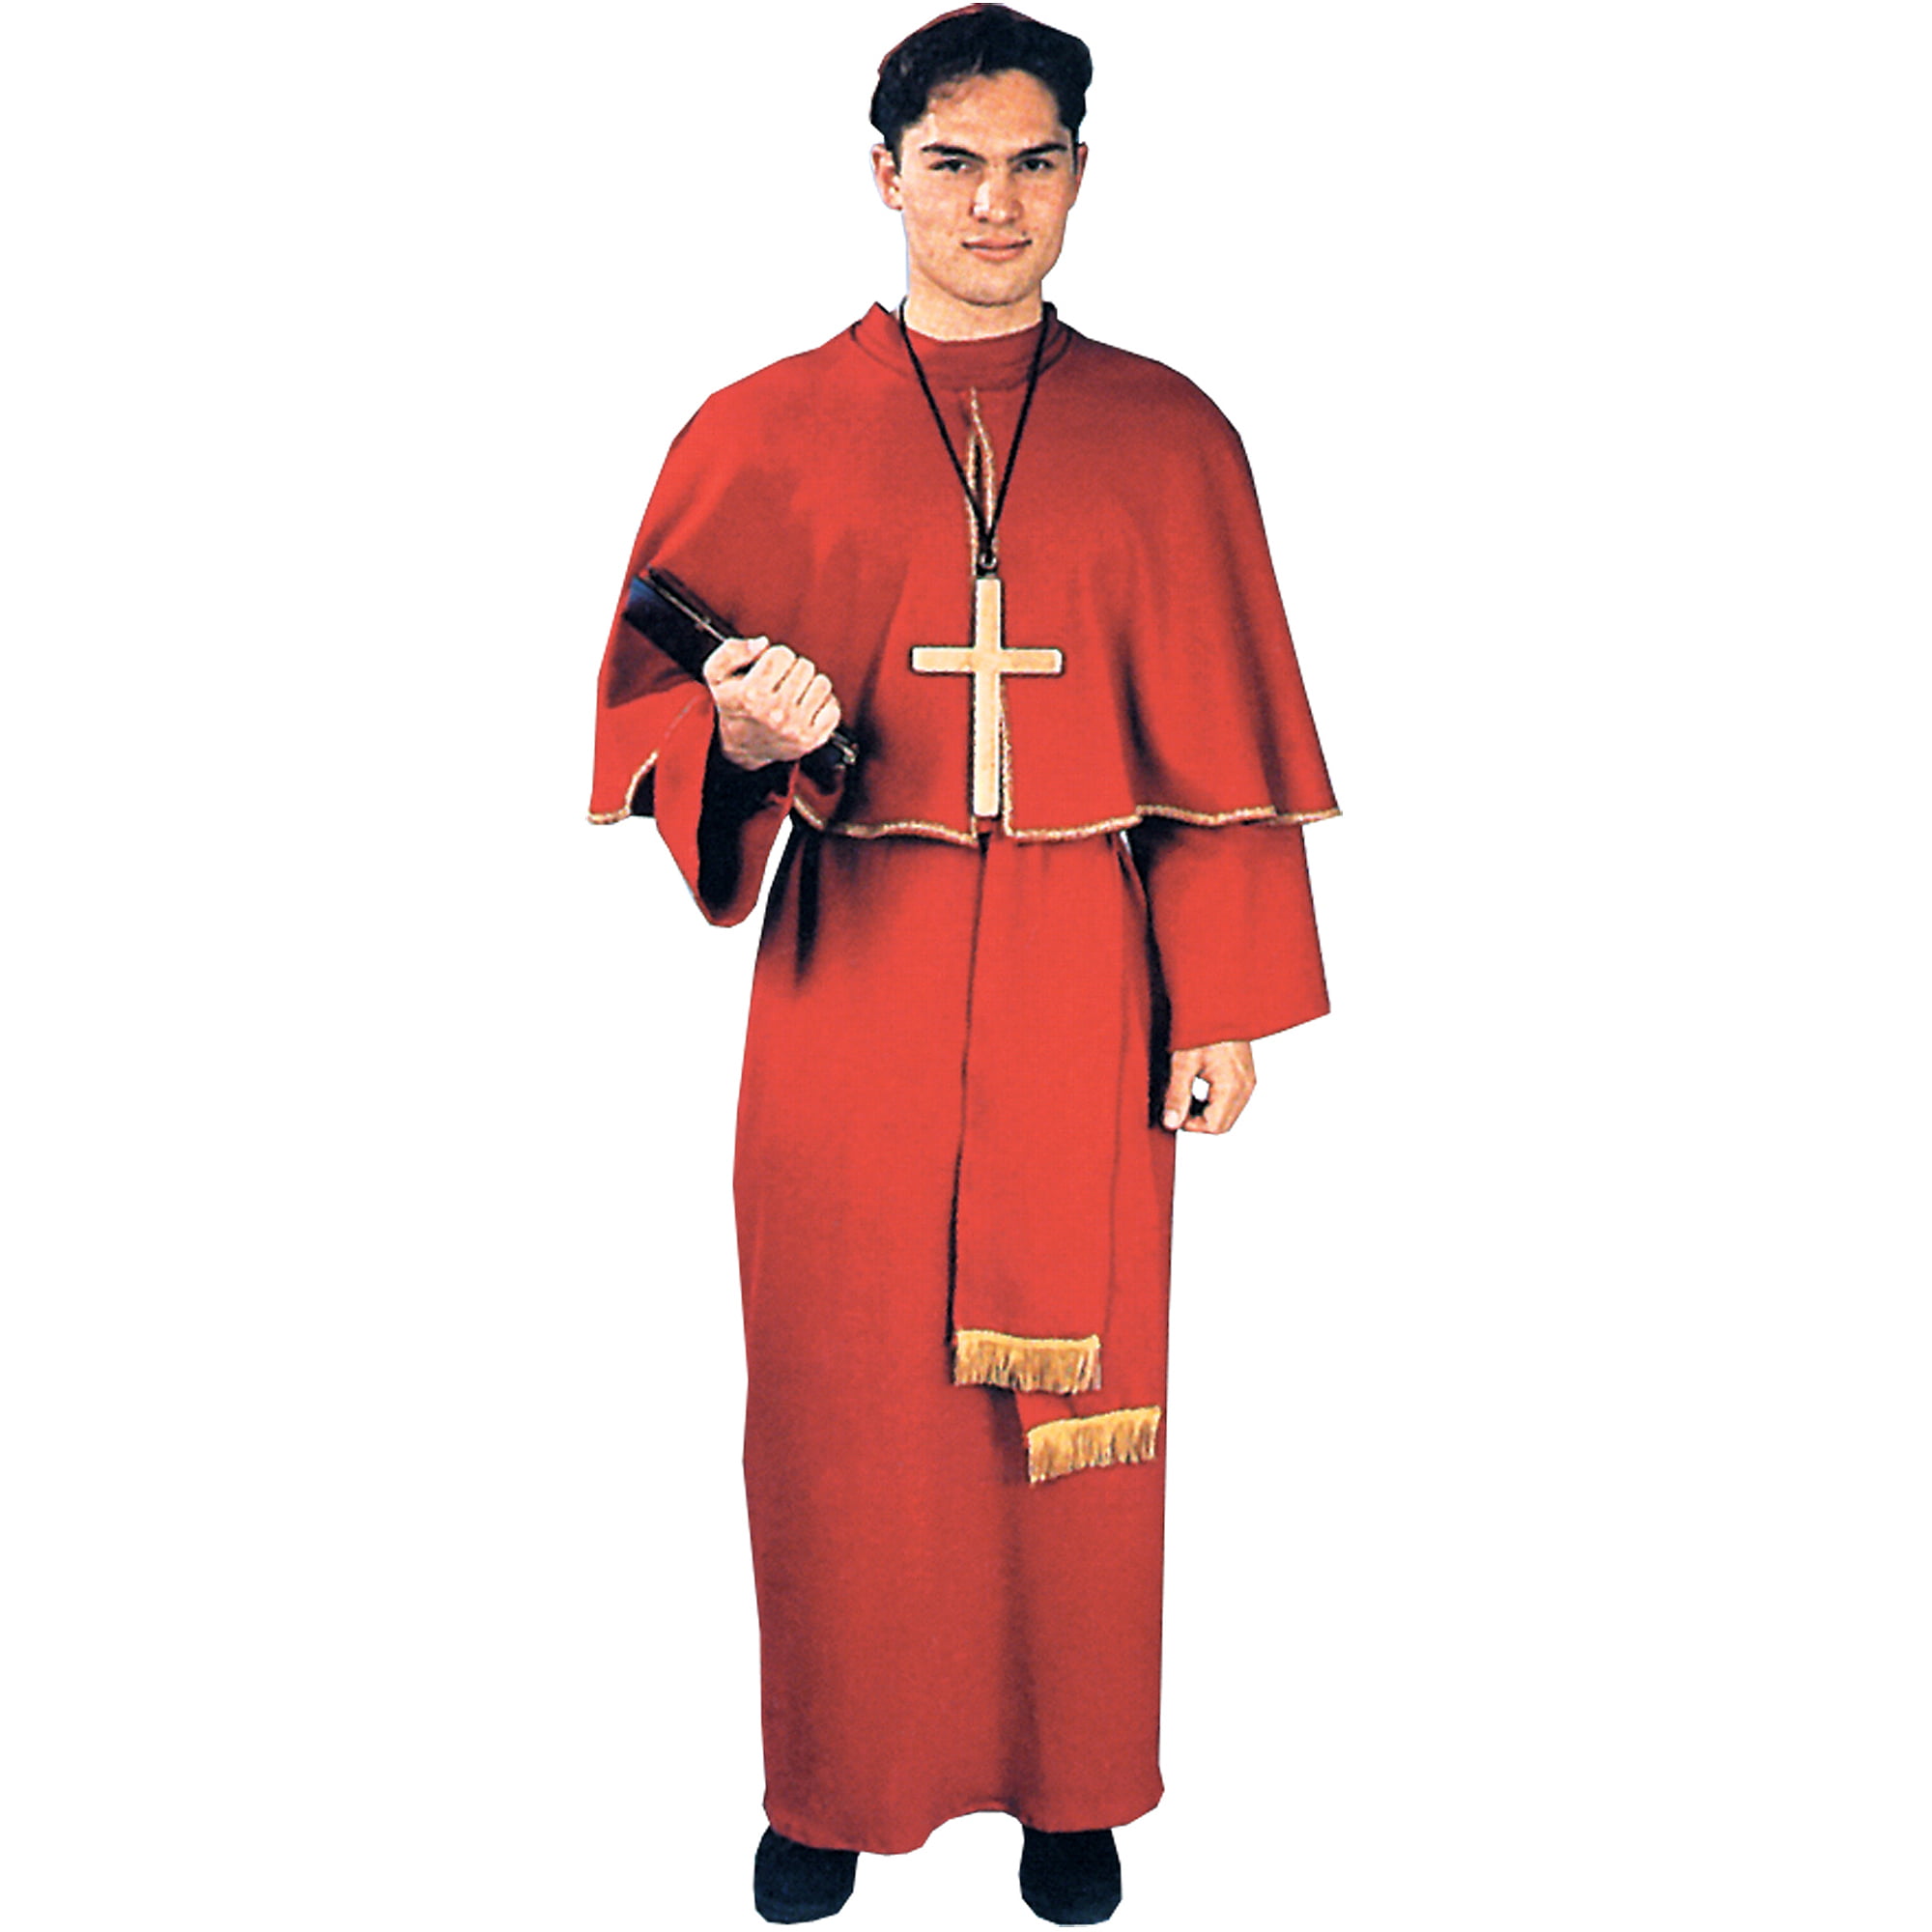 Cardinal Adult Halloween Costume